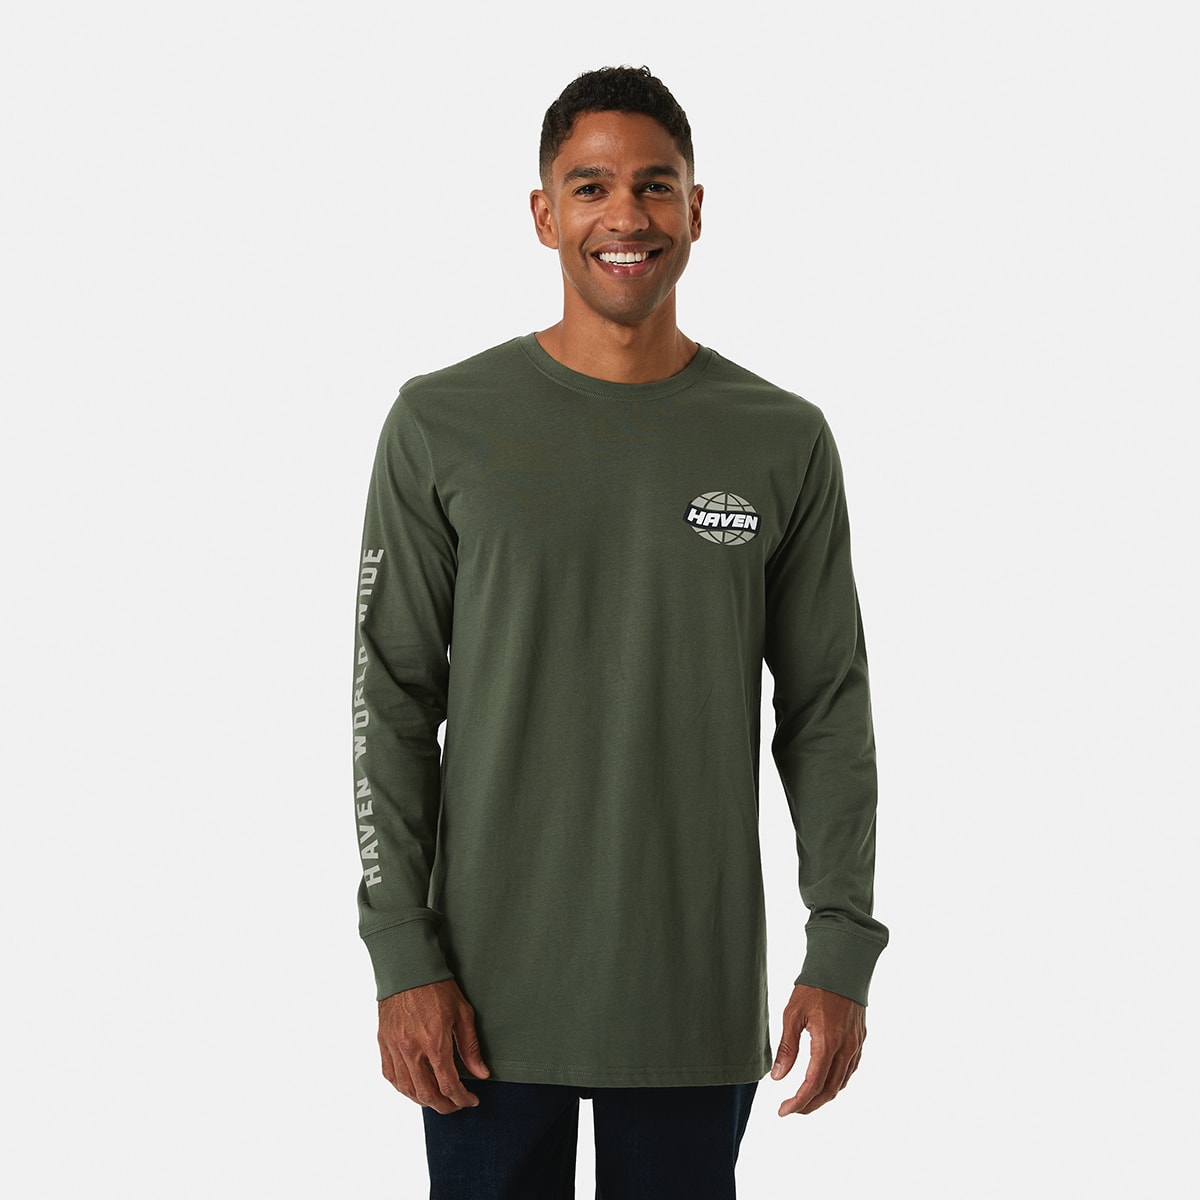 Printed Long Sleeve T-shirt - Kmart